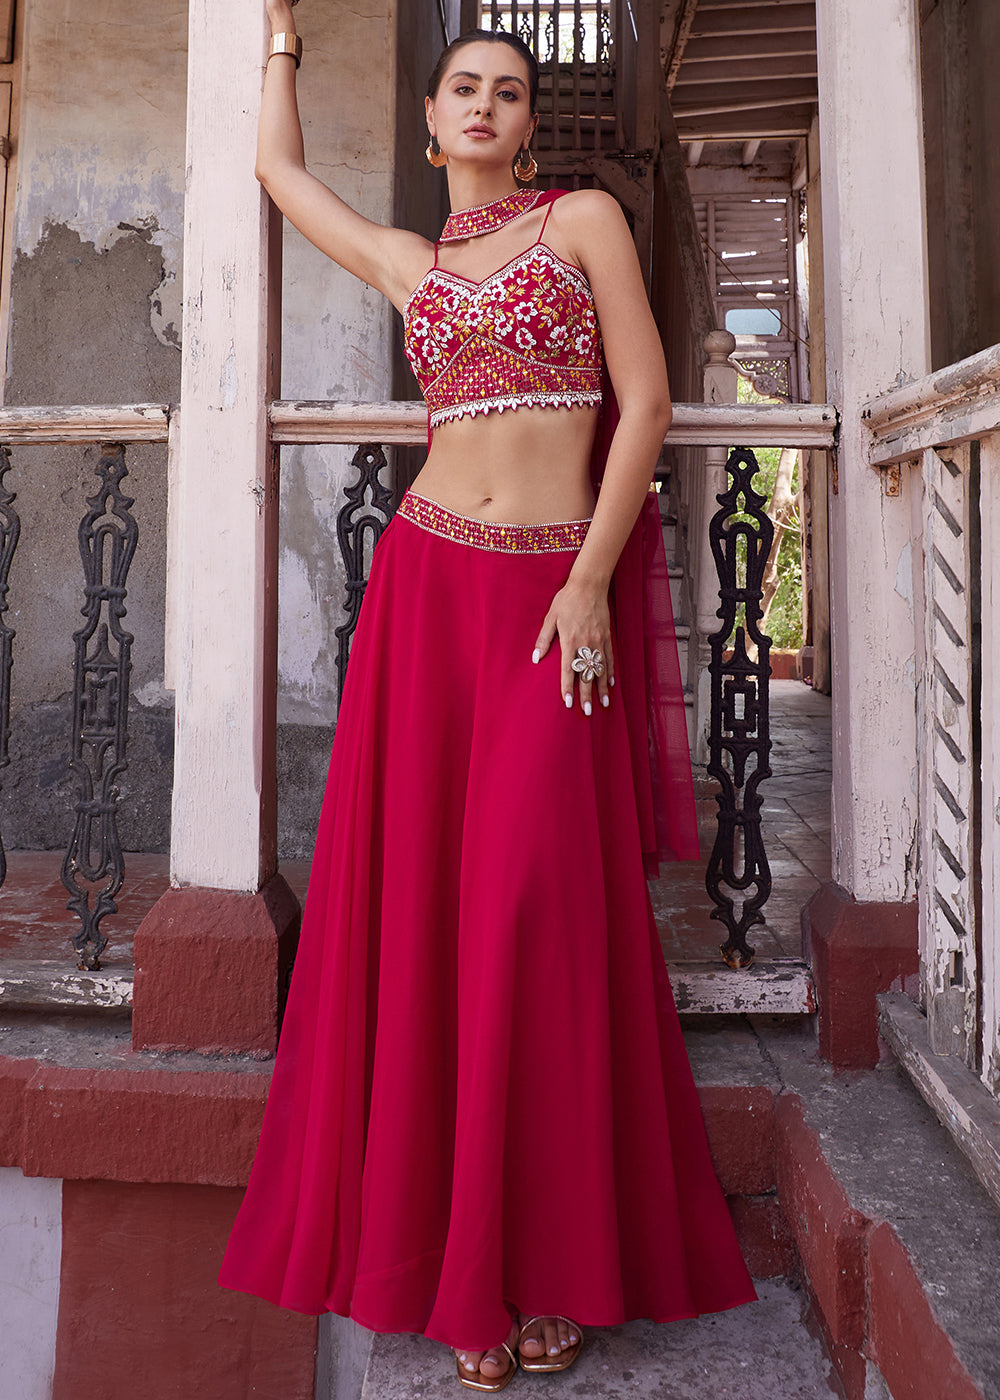 Buy Now Stunning Rani Pink Designer Crop Top Style Lehenga Choli Online in USA, UK, Canada & Worldwide at Empress Clothing. 